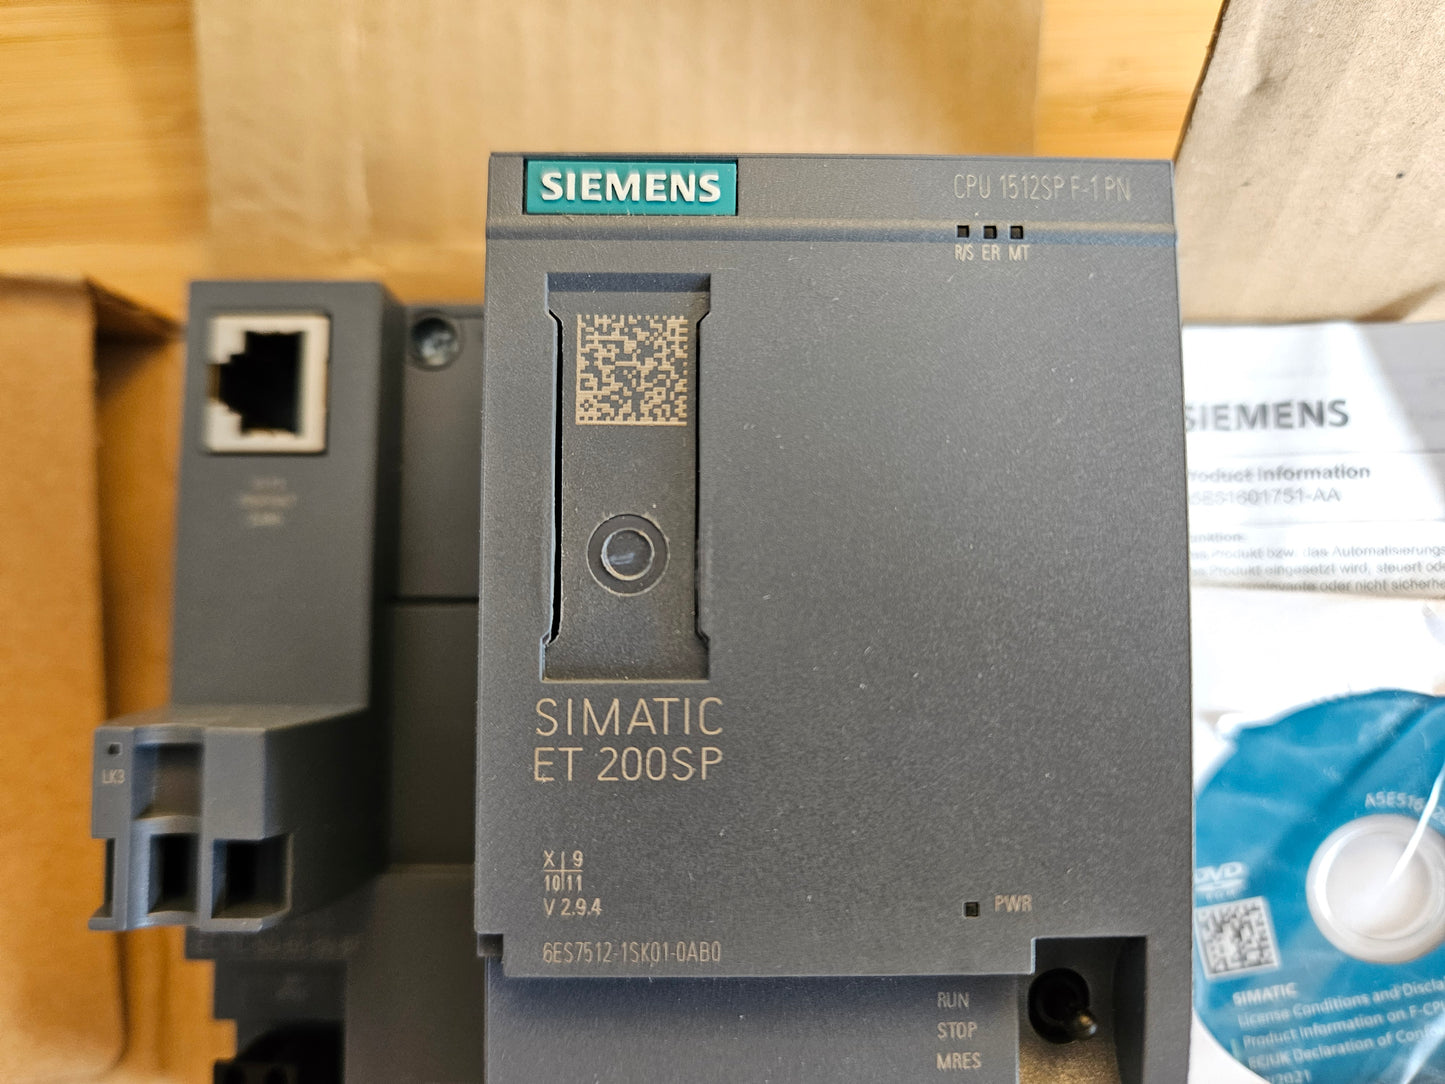 Siemens 6ES7 512-1SK01-0AB0 SIMATIC DP, CPU 1512SP F-1 PN for ET 200SP 6ES7512-1SK01-0AB0